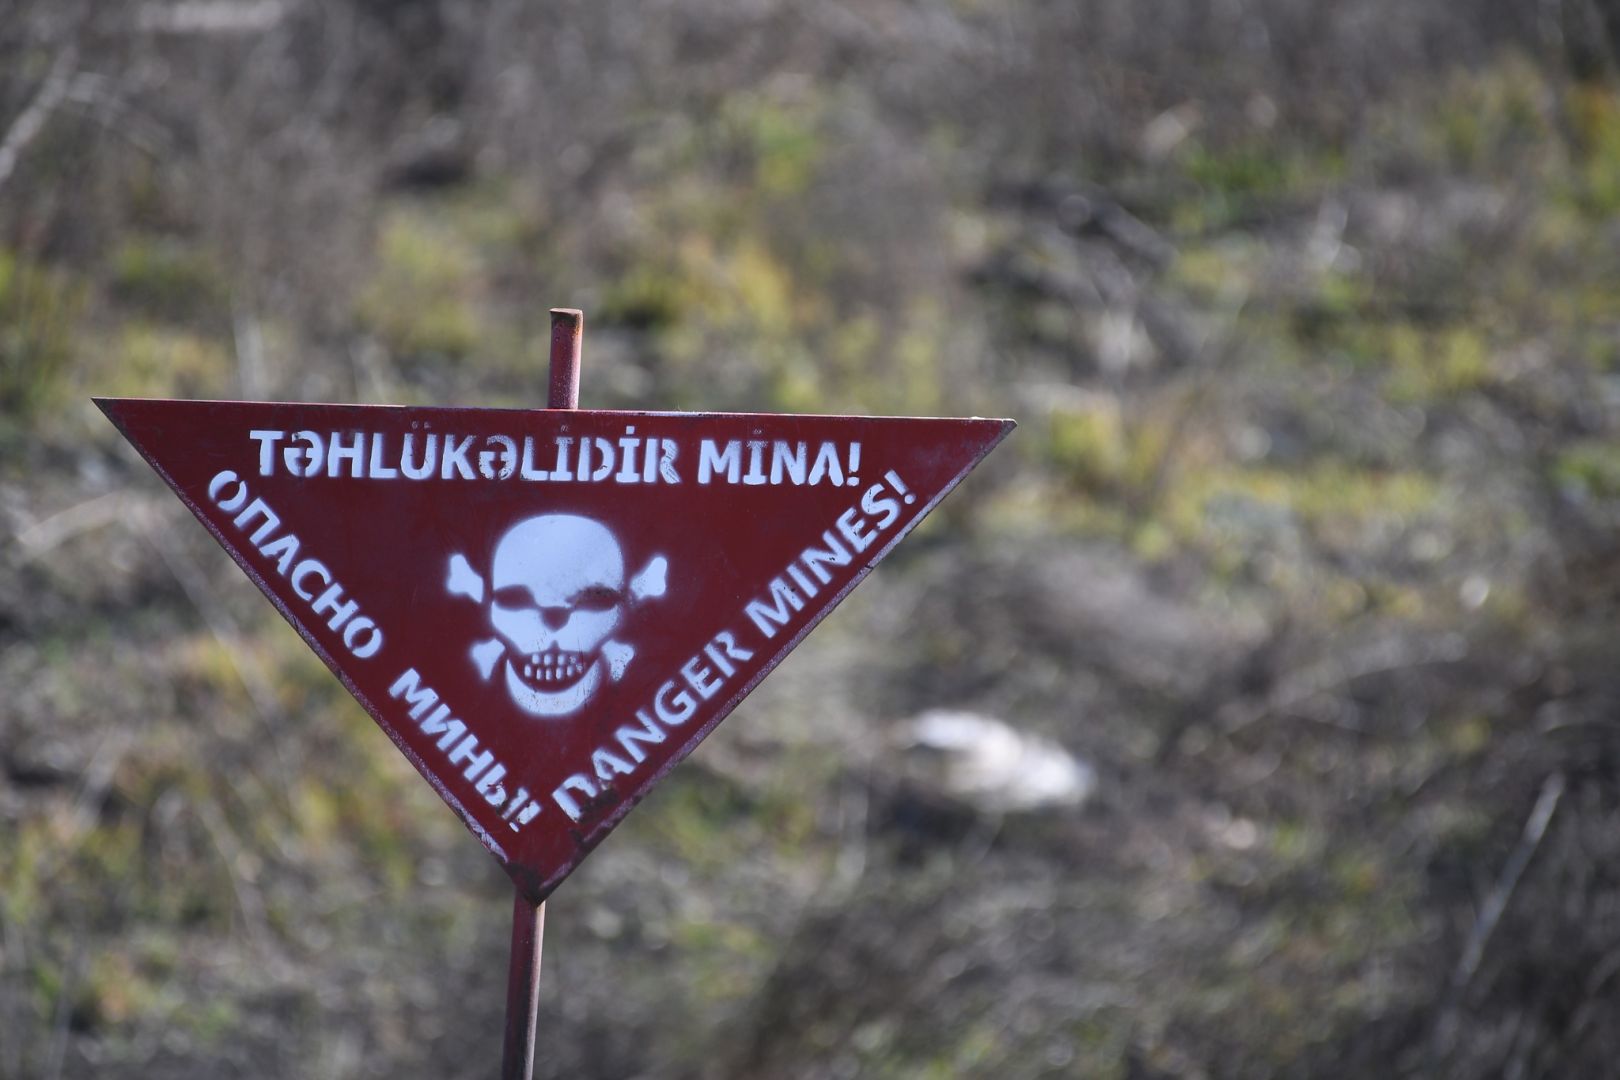 Israeli media highlights landmine issues in Azerbaijan